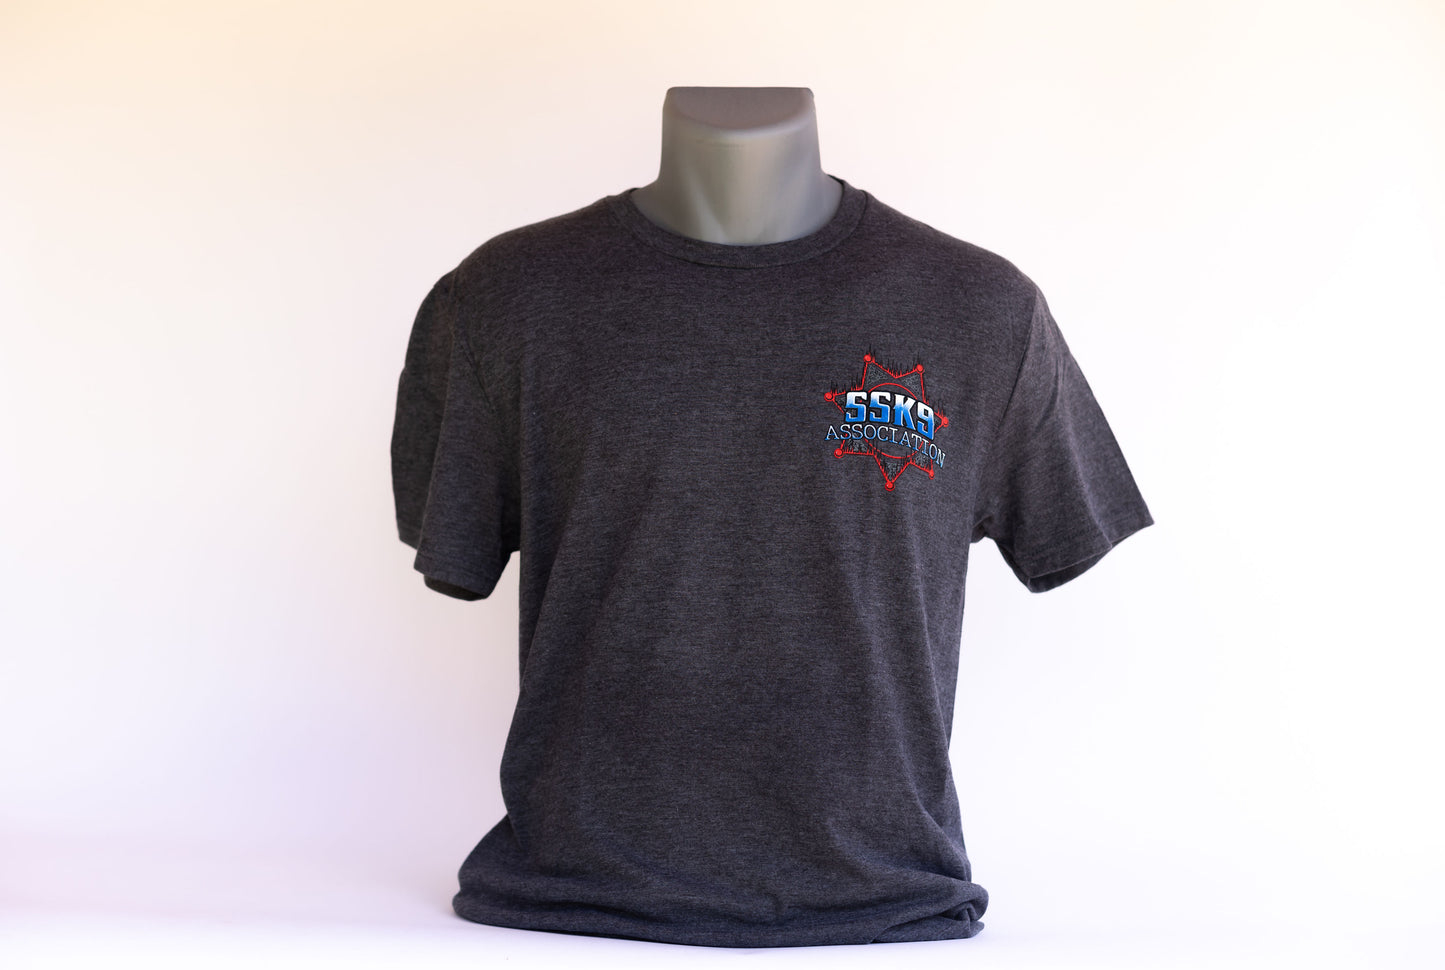 #20 Crew Neck Gray Shirt w/Red logo